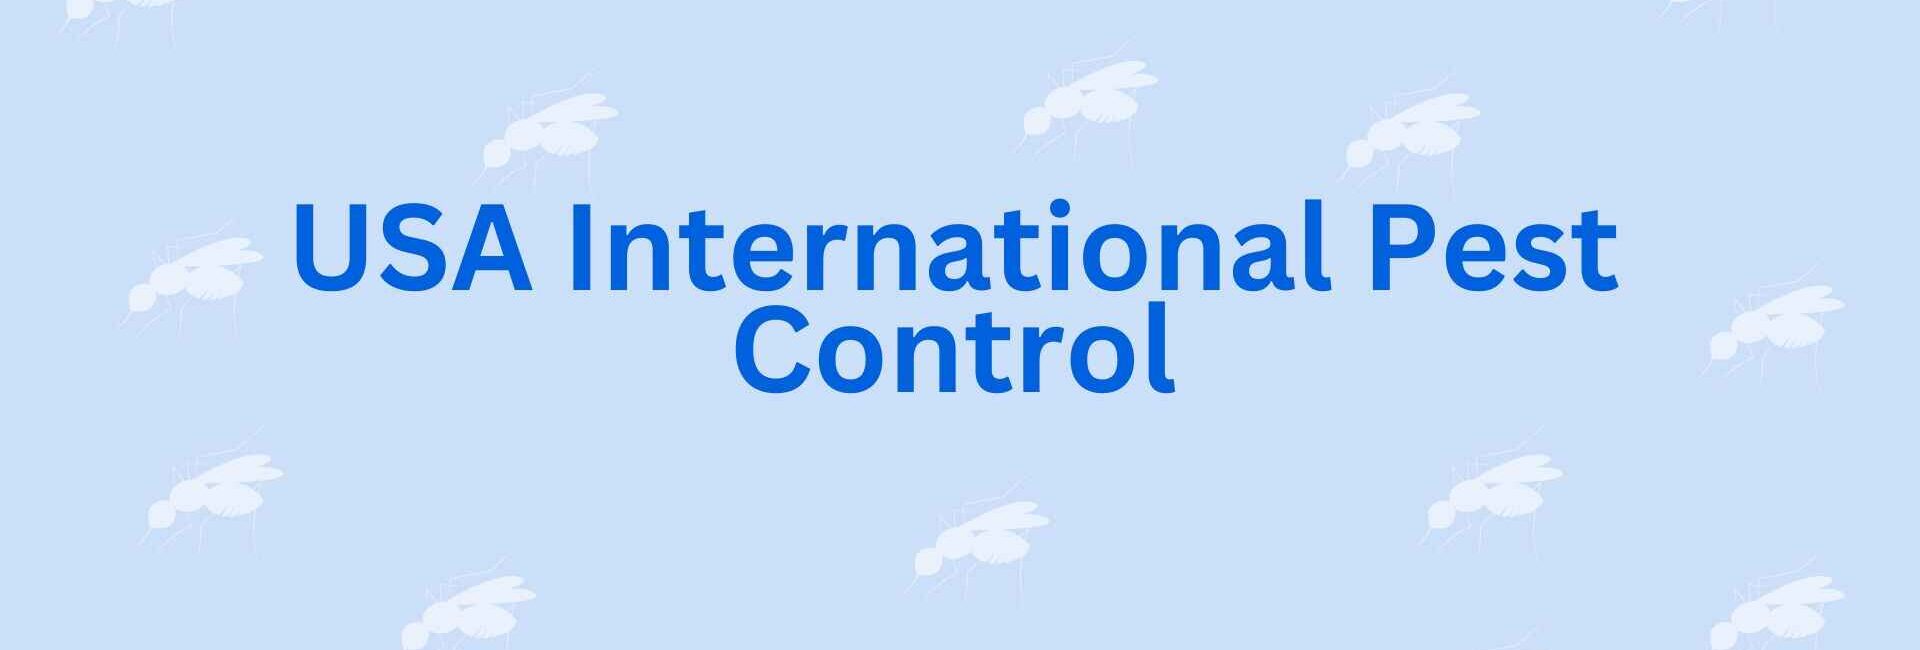 USA International Pest Control - Pest Control in Noida